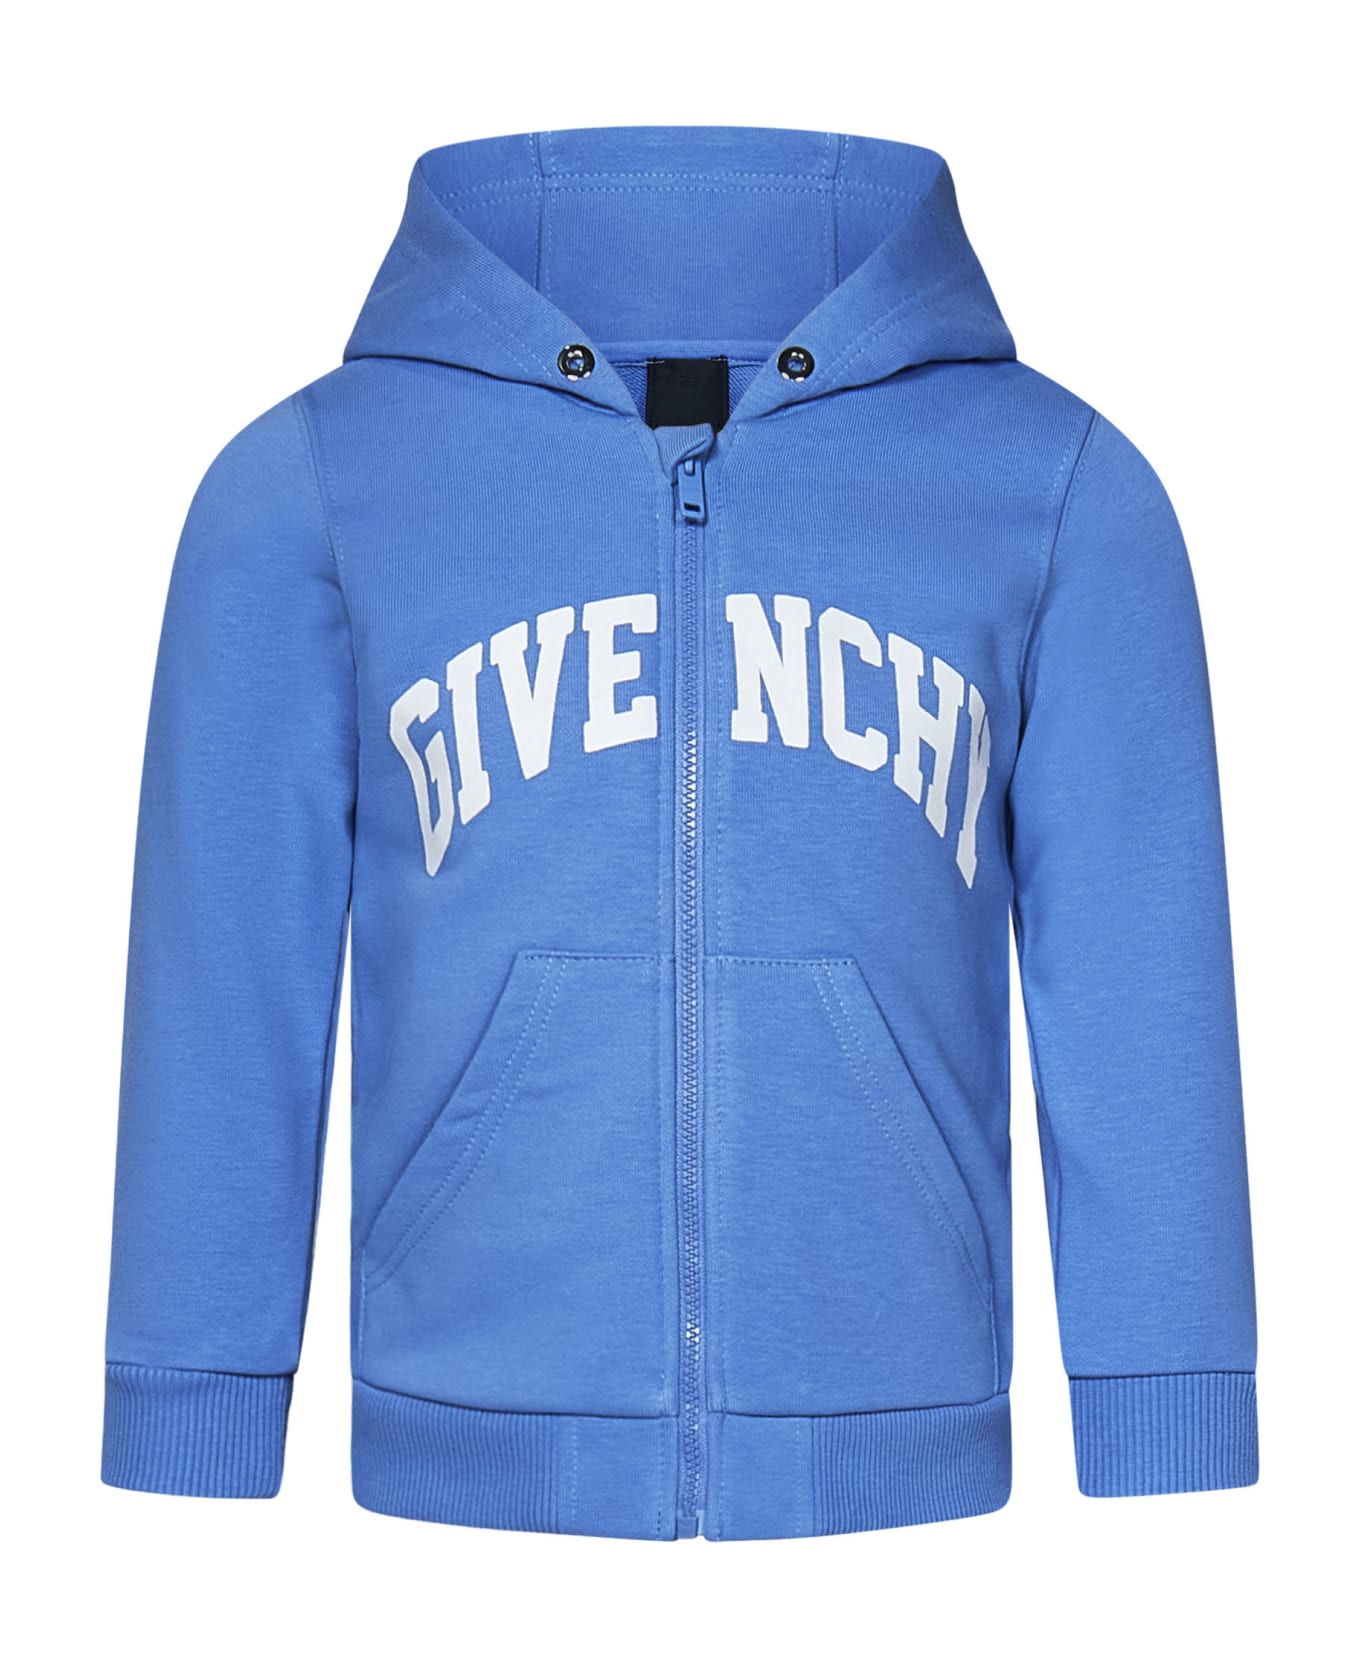 Givenchy Kids Sweatshirt - Clear Blue